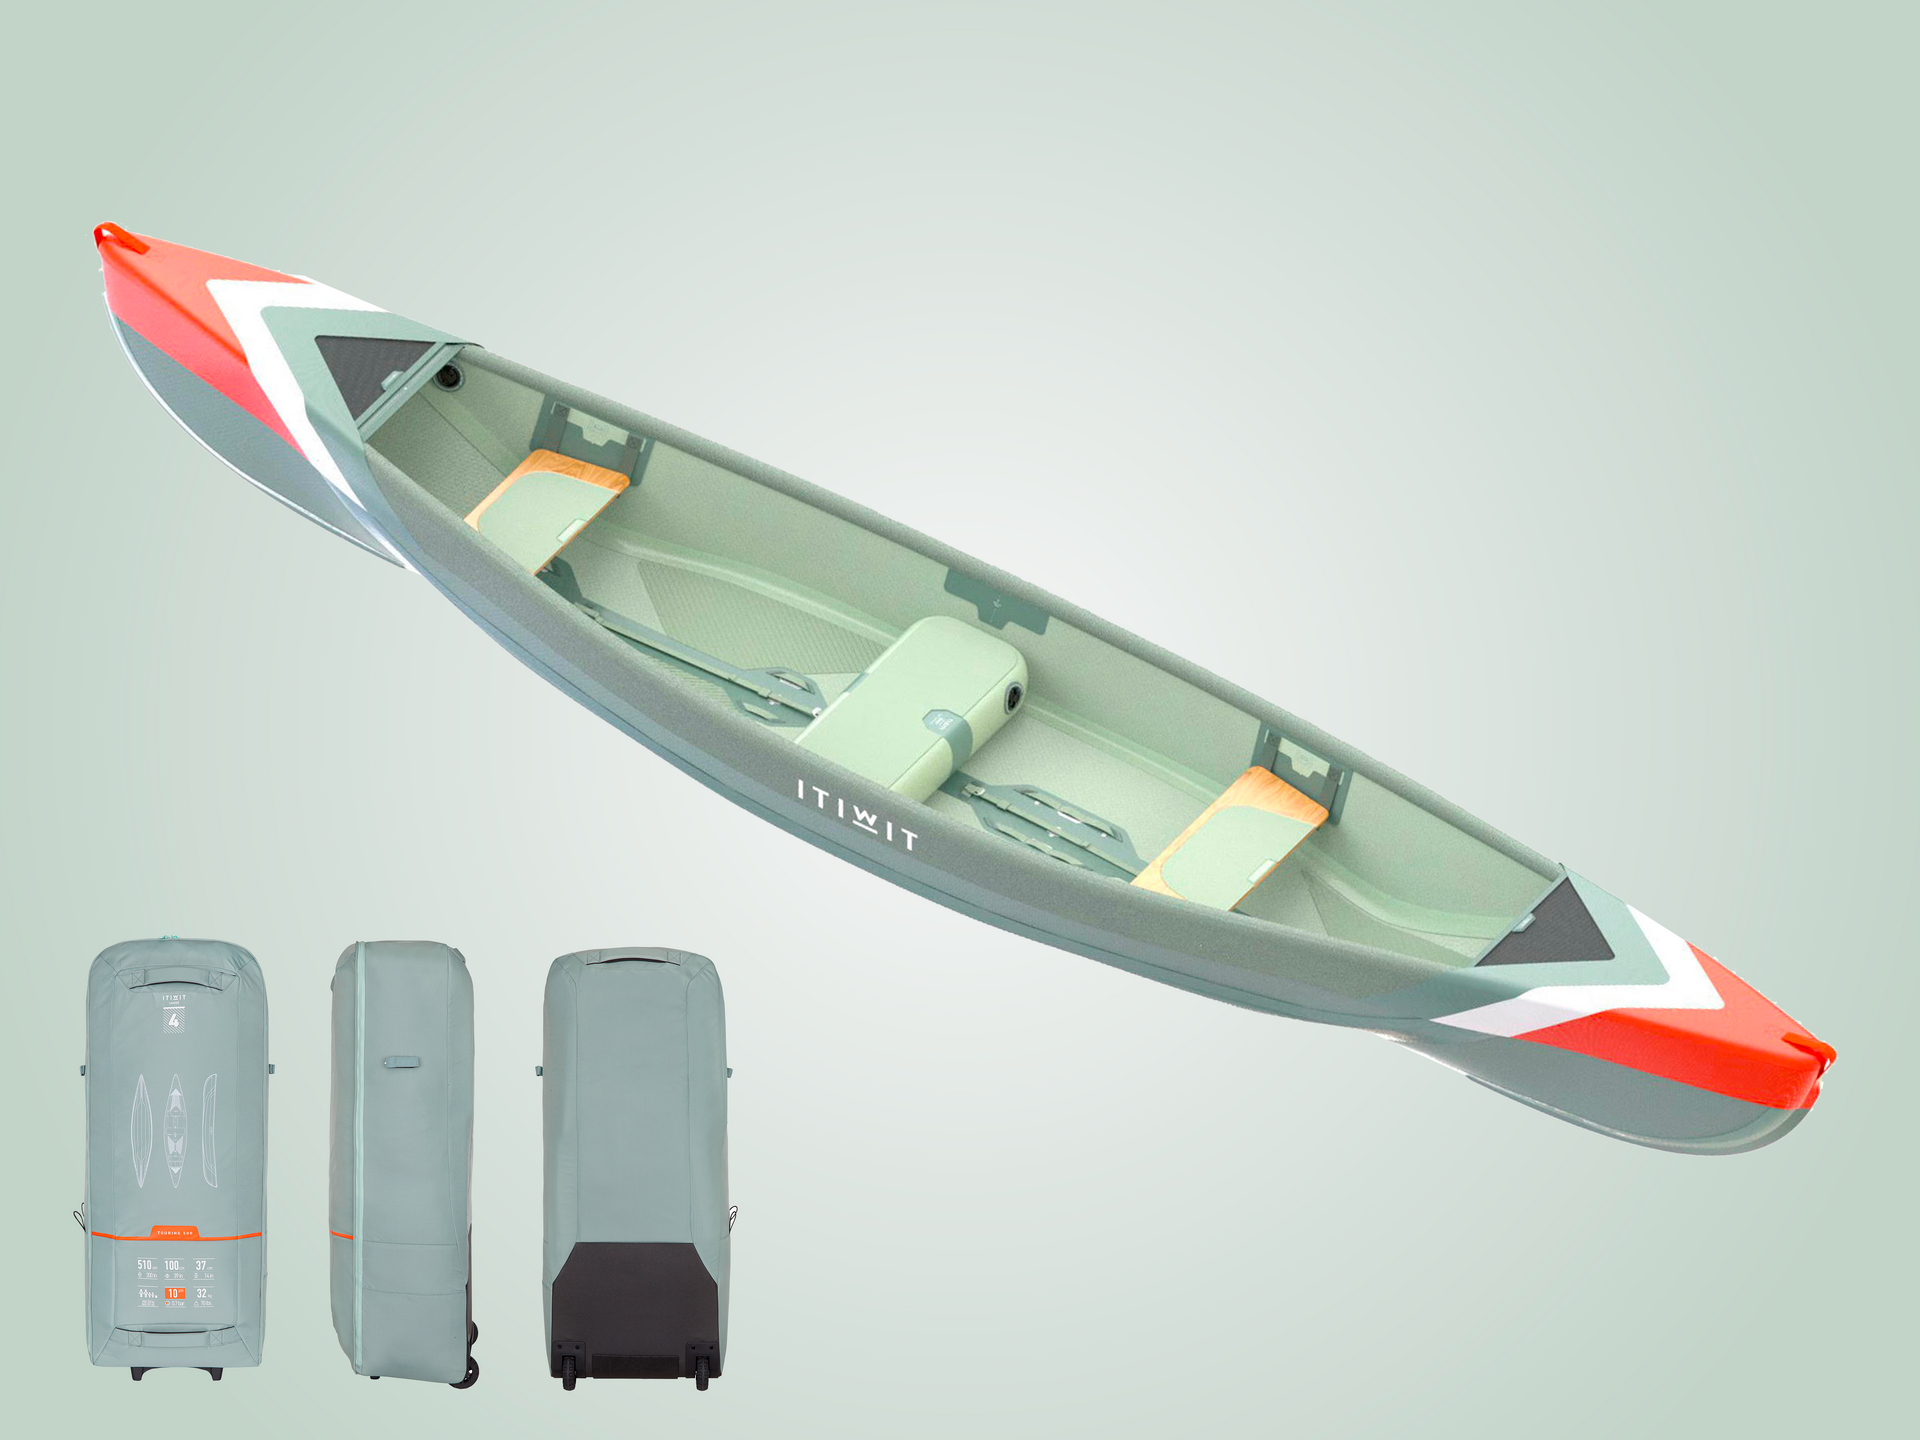 canoe kayak gonflable itiwit et sa valise de rangement